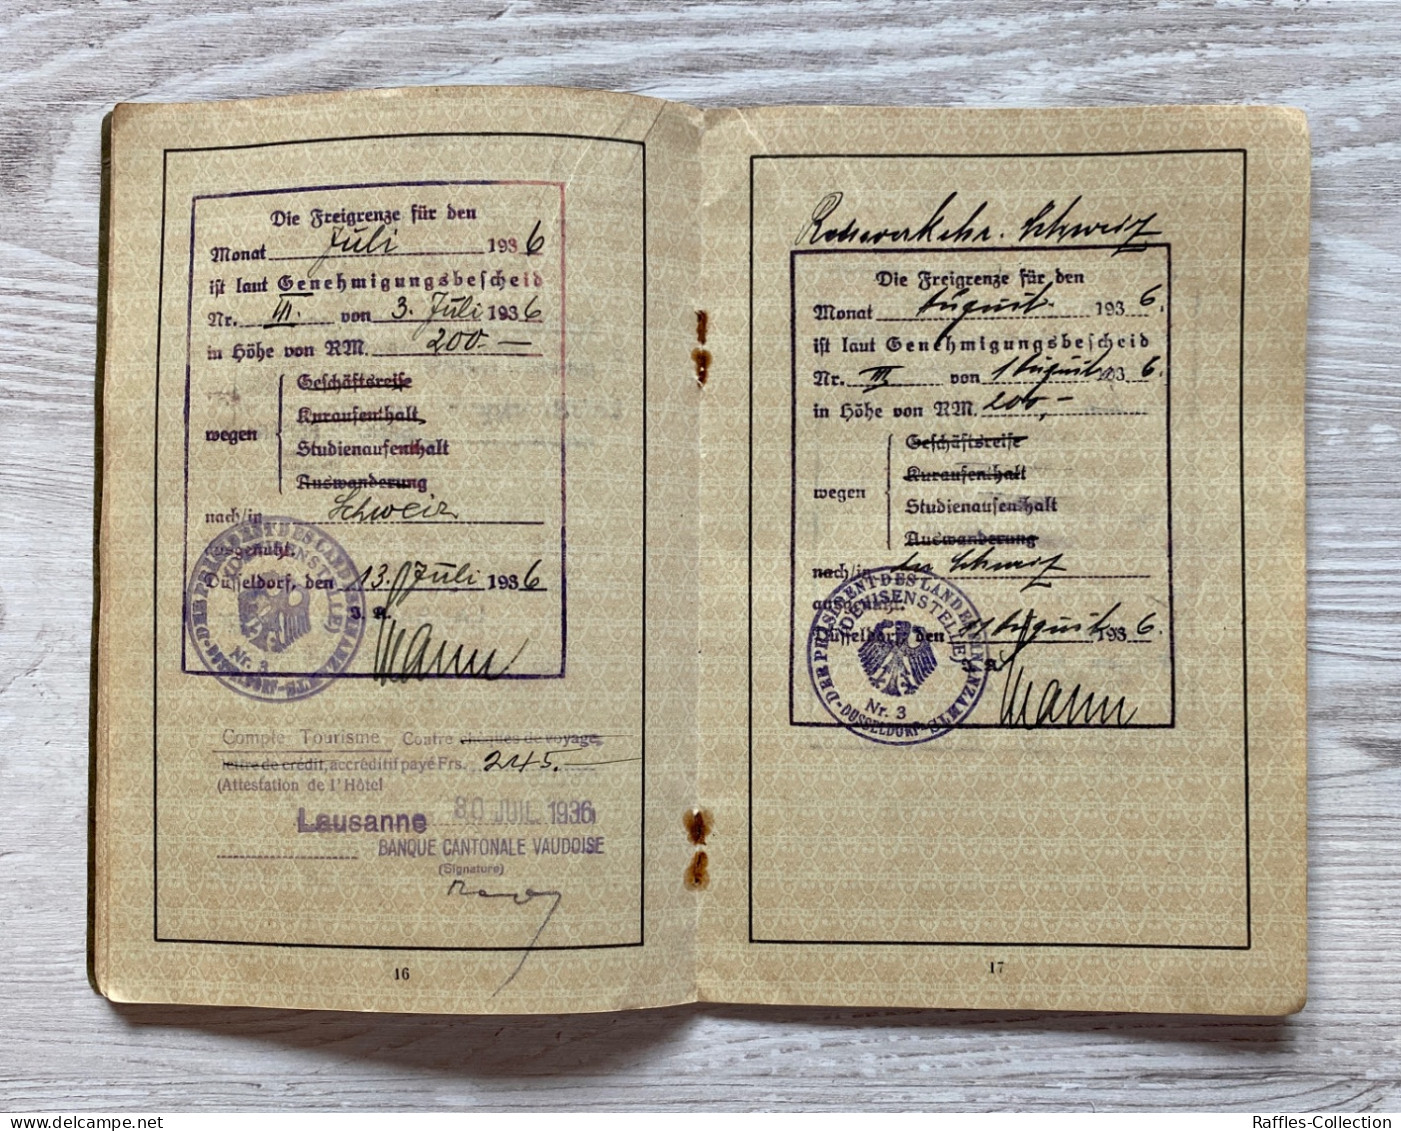 WW2 Germany 1933-1942 passport & other documents passeport reisepass pasaporte passaporto